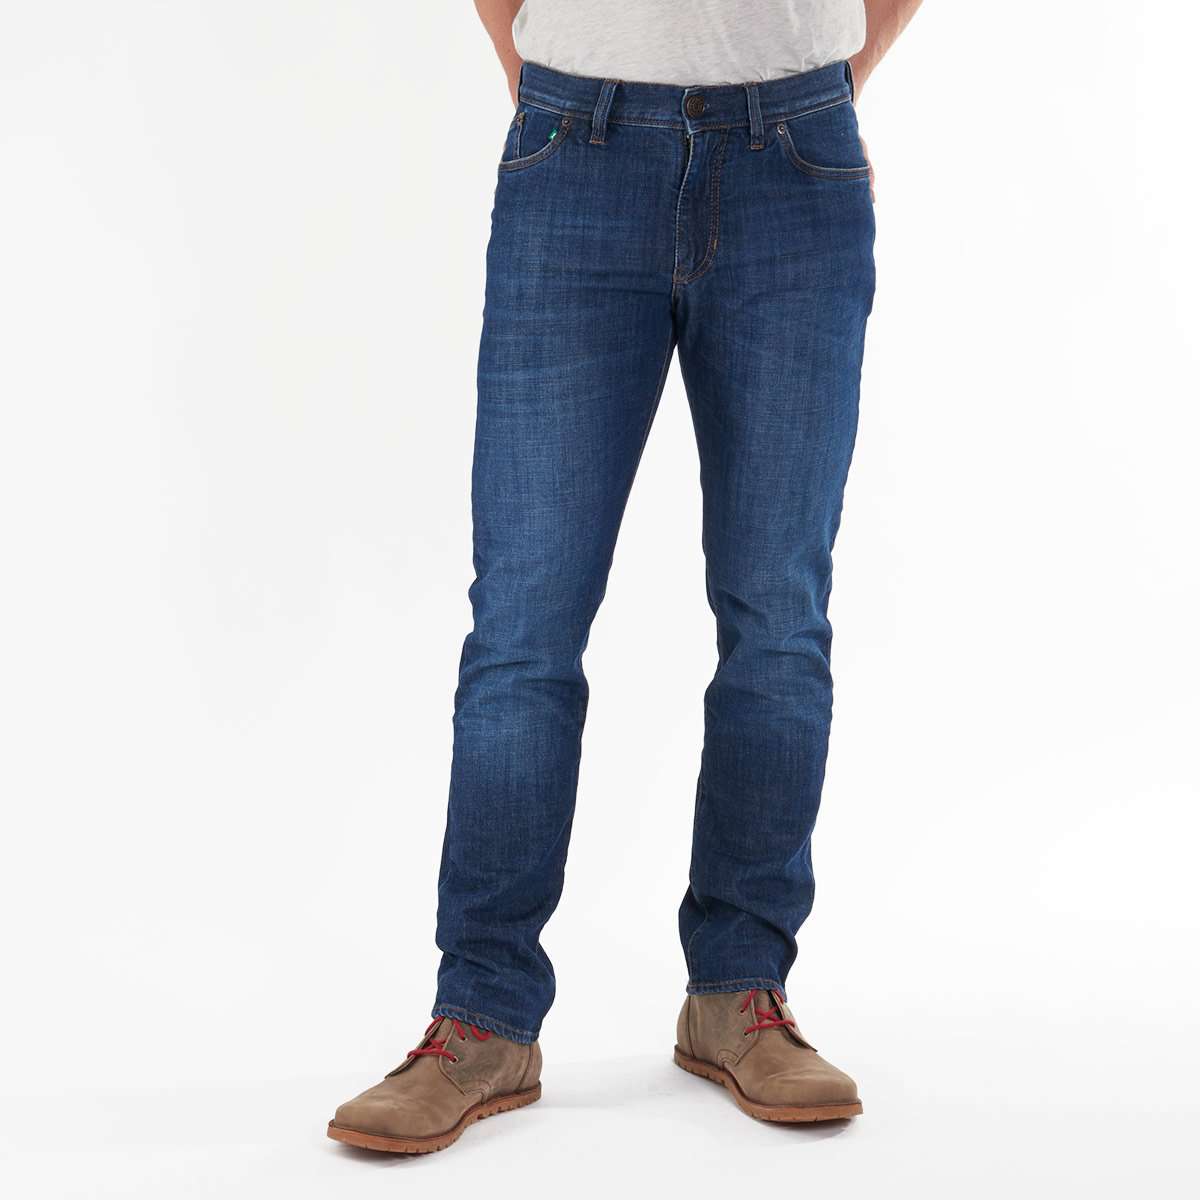 Fairjeans Herren-Jeans: Körperbetonter Slim Fit, Bio-Baumwolle, leichter Used-Look